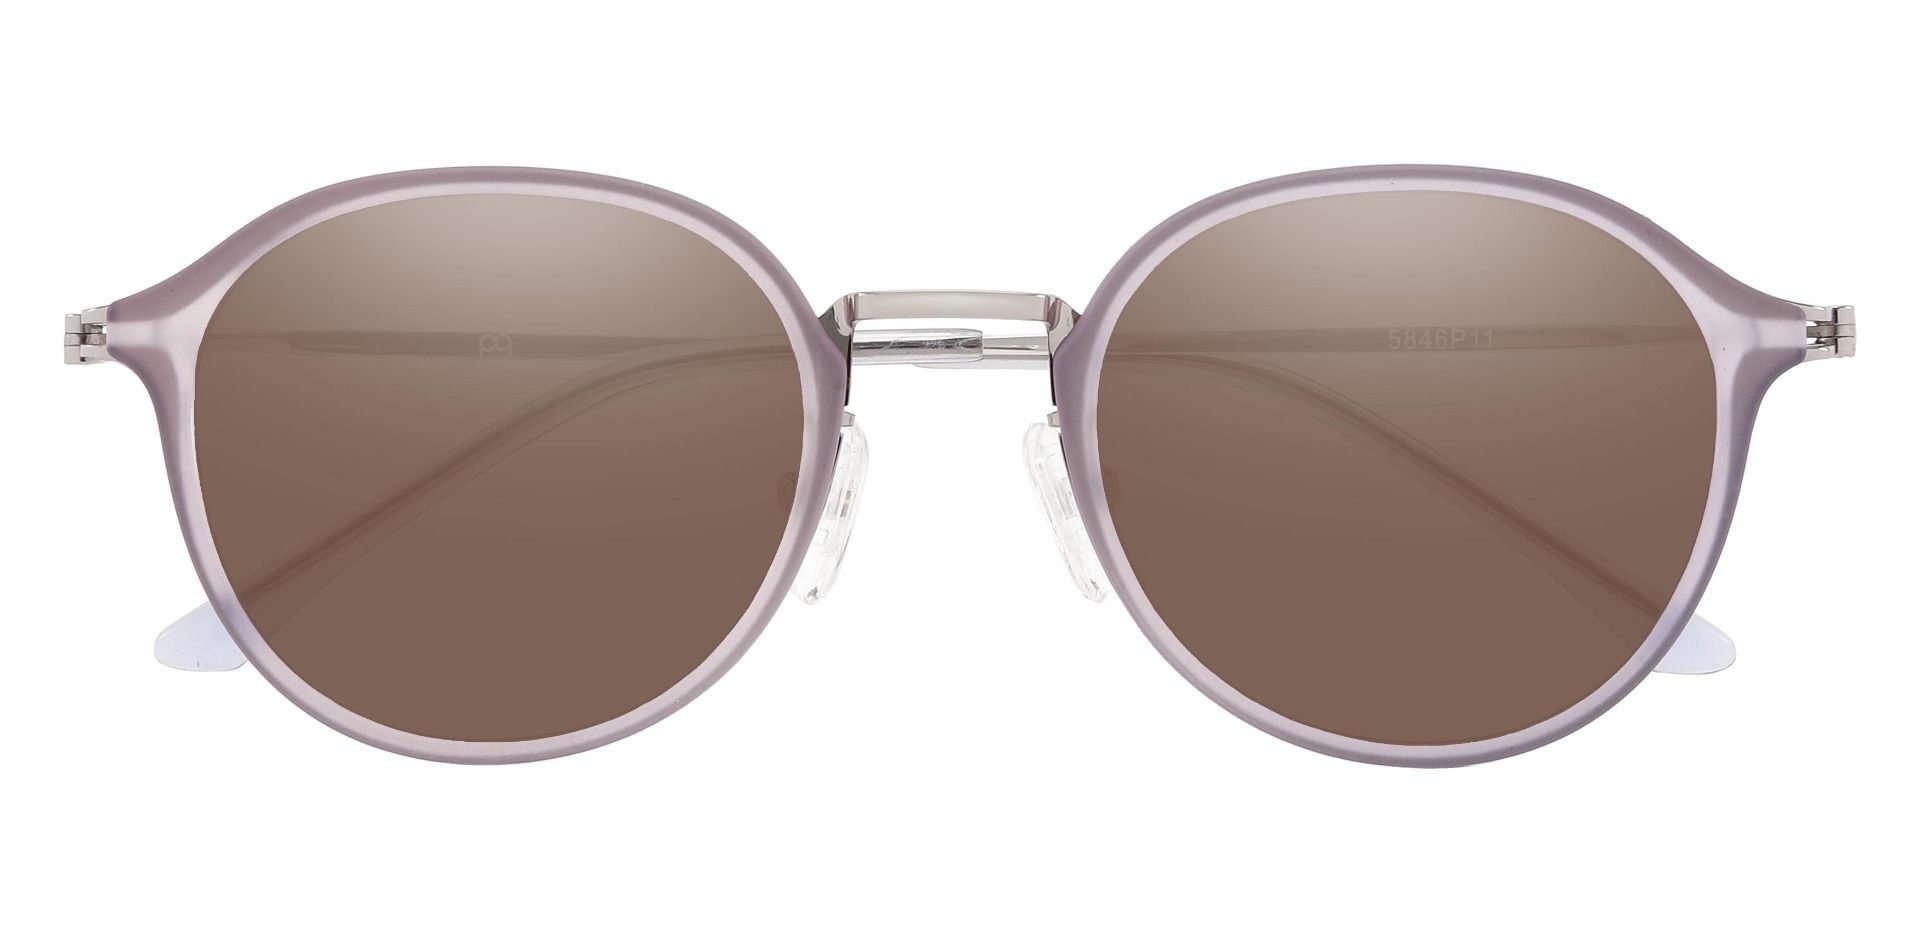 Billings Round Prescription Sunglasses - Purple Frame With Brown Lenses